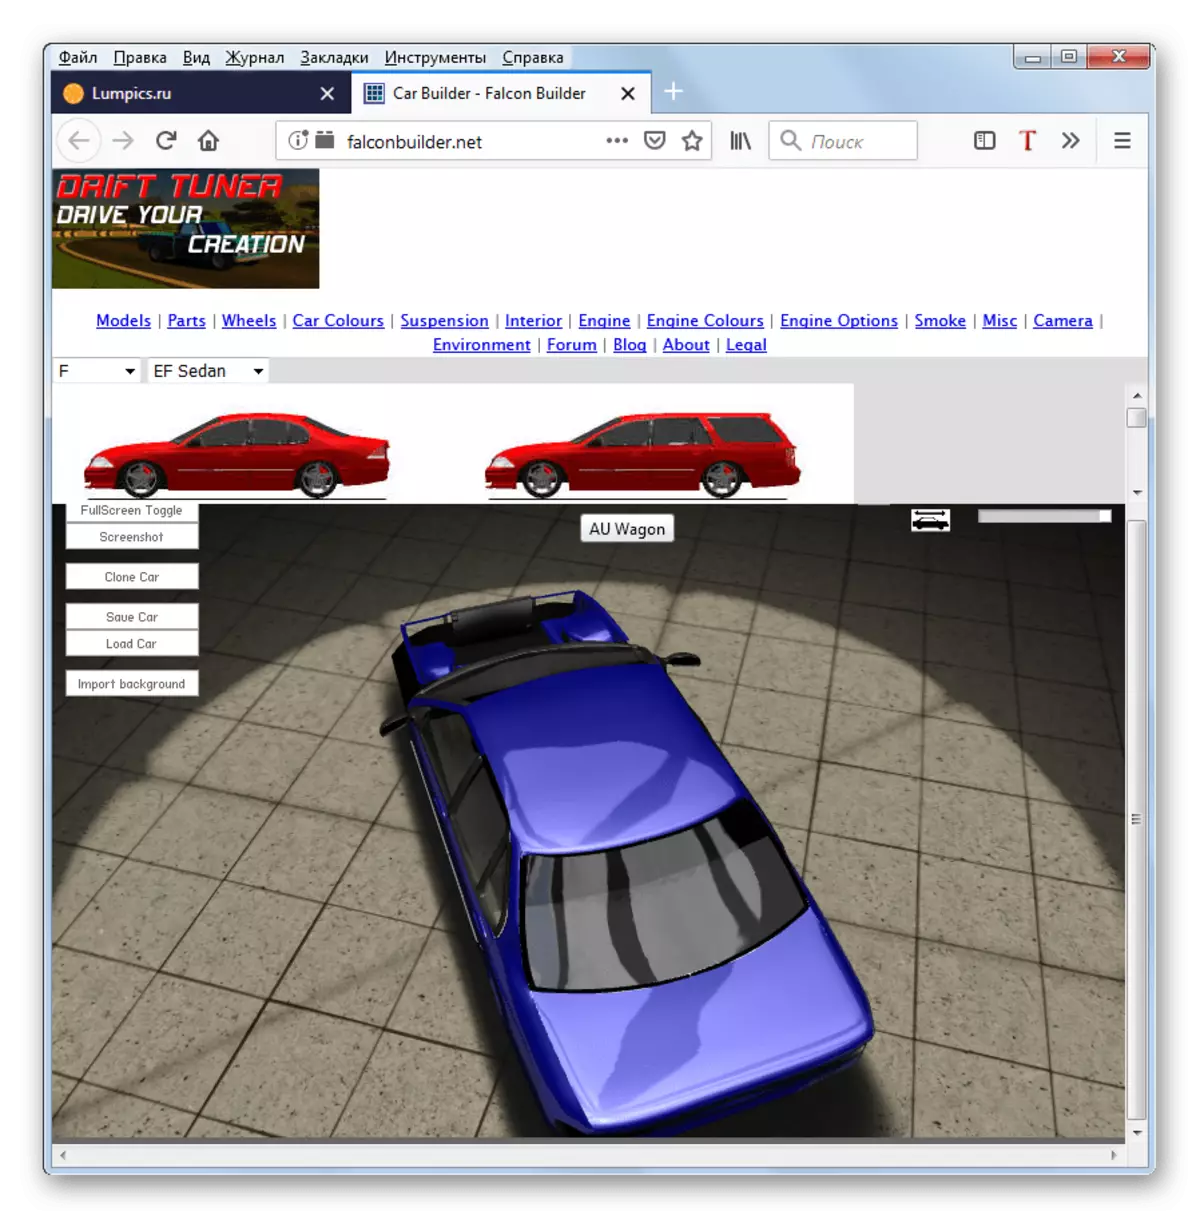 Mozilla Firefox 브라우저에서 FalconBuilder 웹 사이트에서 자동차의 가상 이미지의 형성